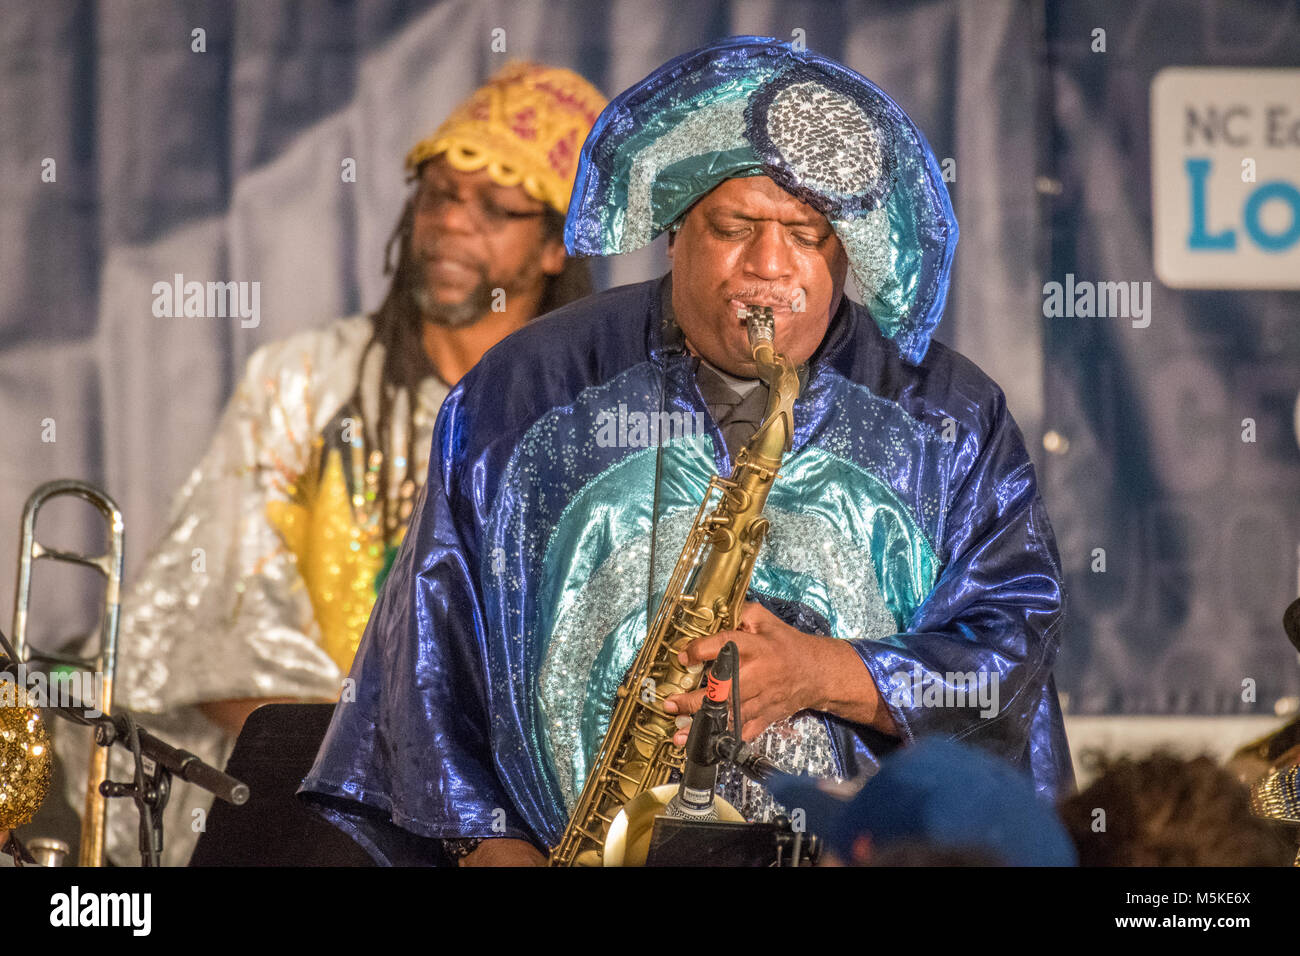 Male member in the cosmic group Sun Ra Arkestra playing the saxophone at National Folk Life Festival Greensboro, North Carolina. Stock Photo